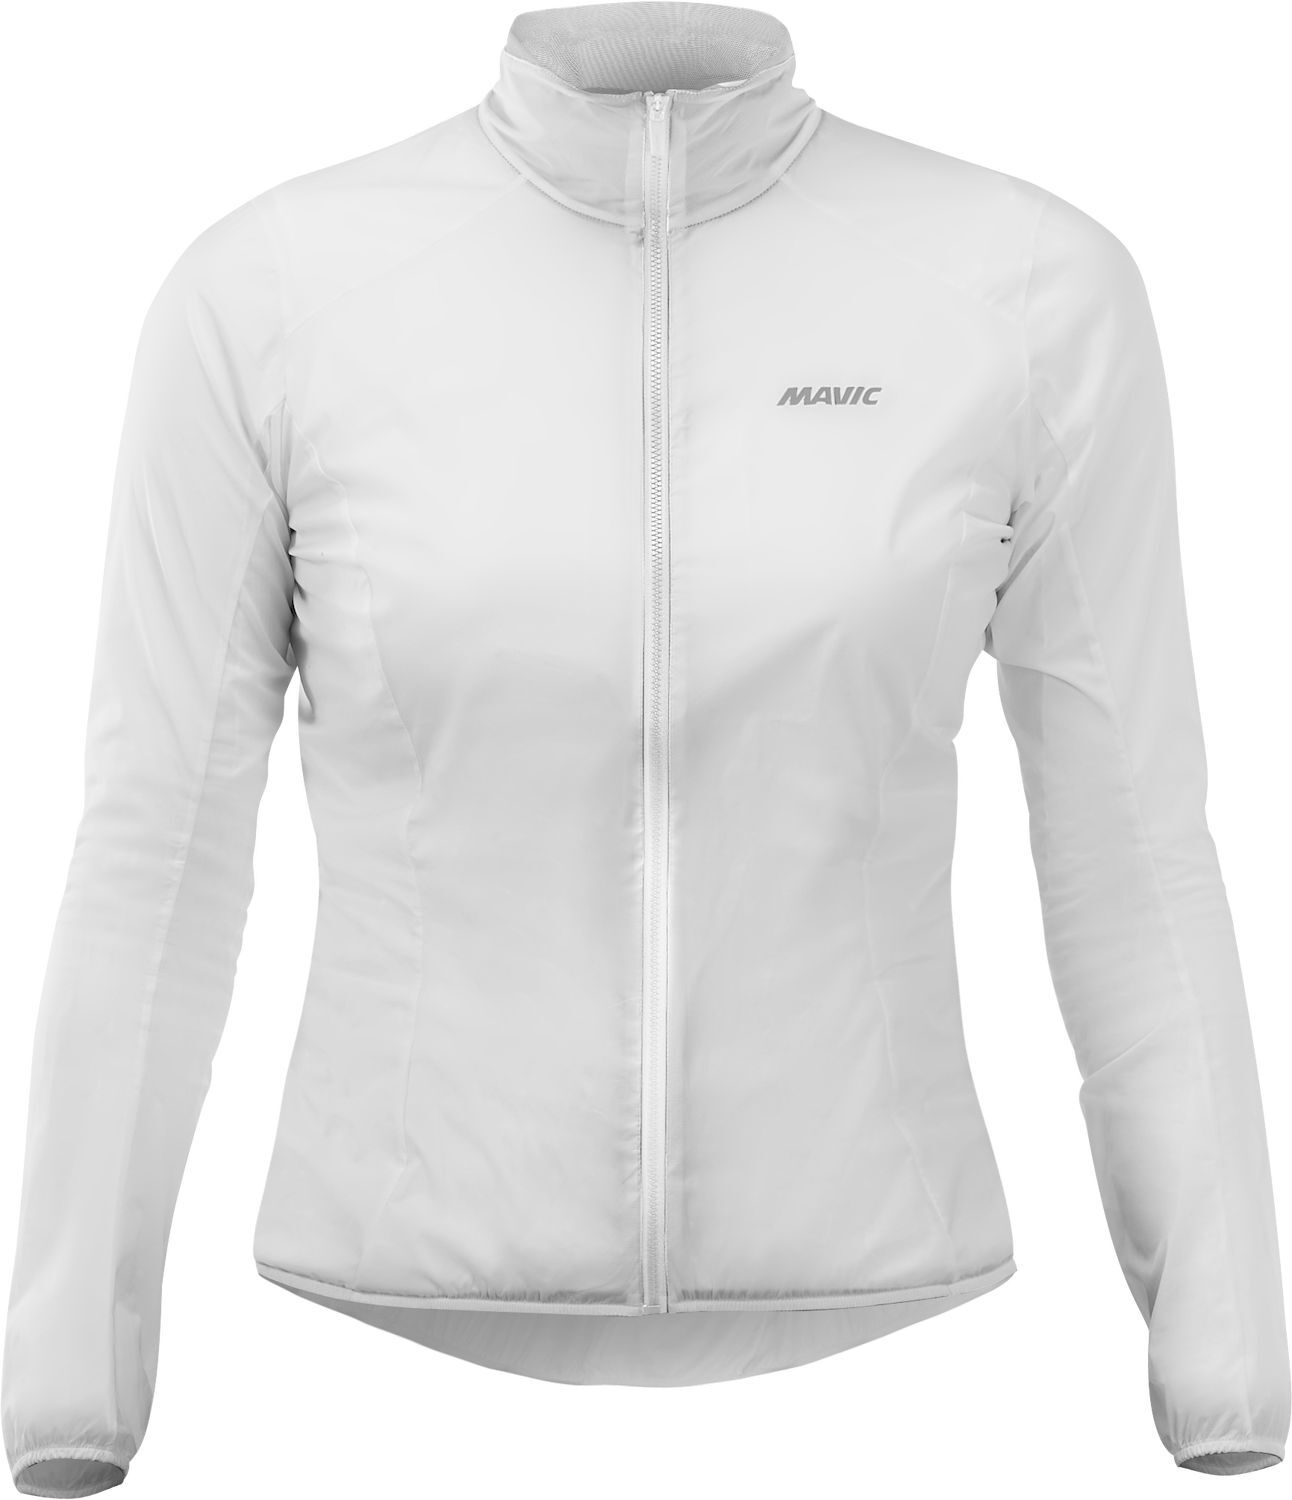 Mavic Sirocco - Cycling jacket - Women's